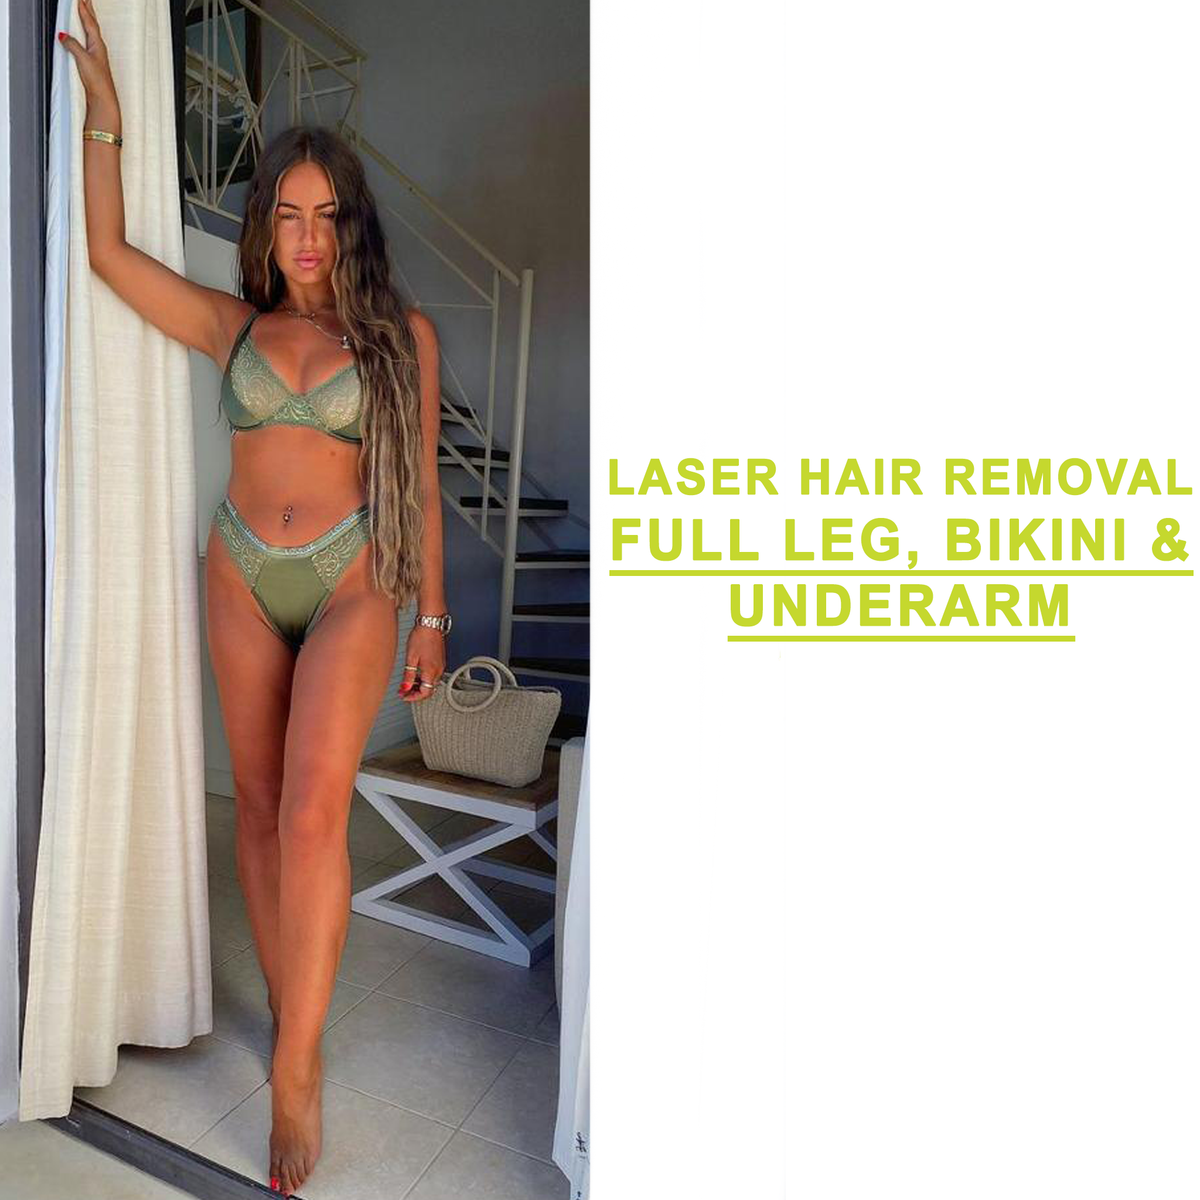 Laser Hair Removal Full Leg, Bikini & Underarm -  6 Treatments